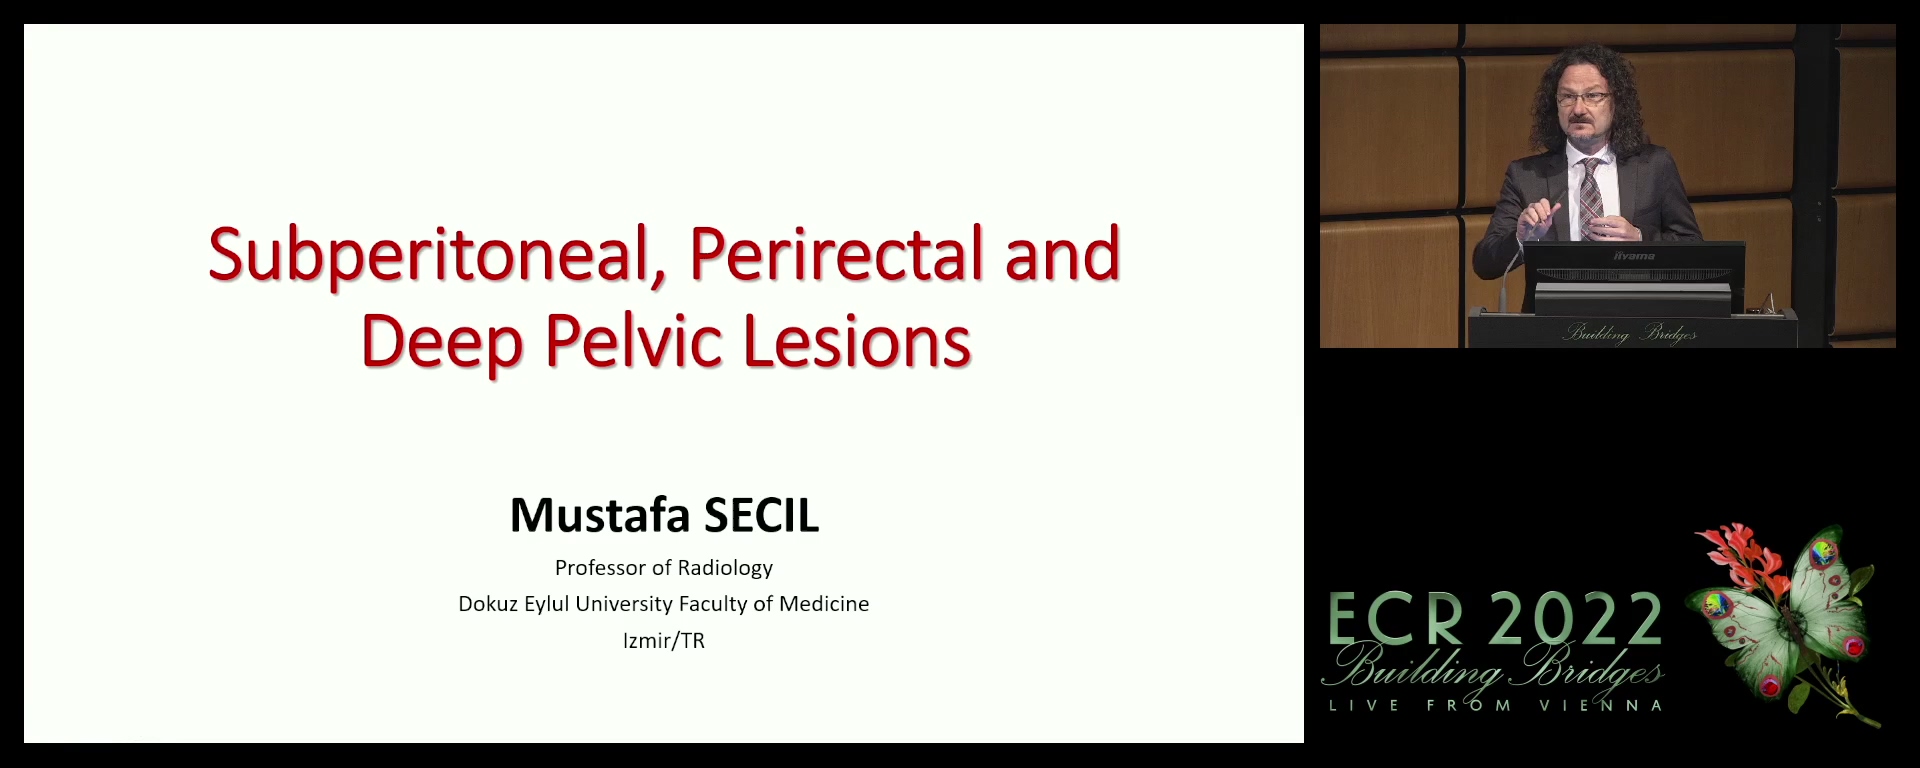 Subperitoneal, perirectal and deep pelvic lesions